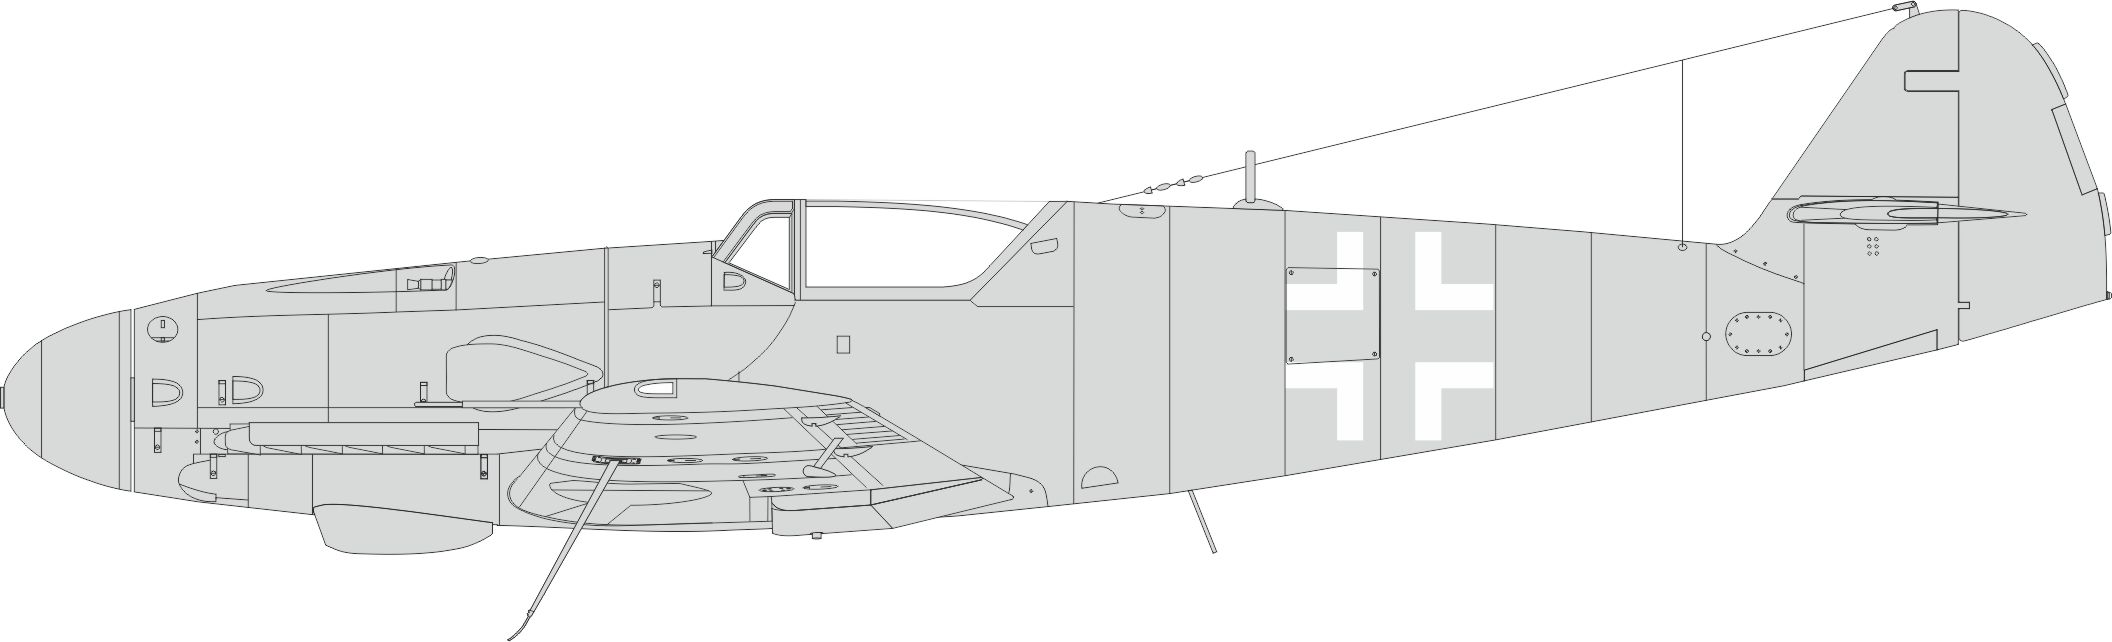 1/48 Bf 109K national insignia (EDUARD)